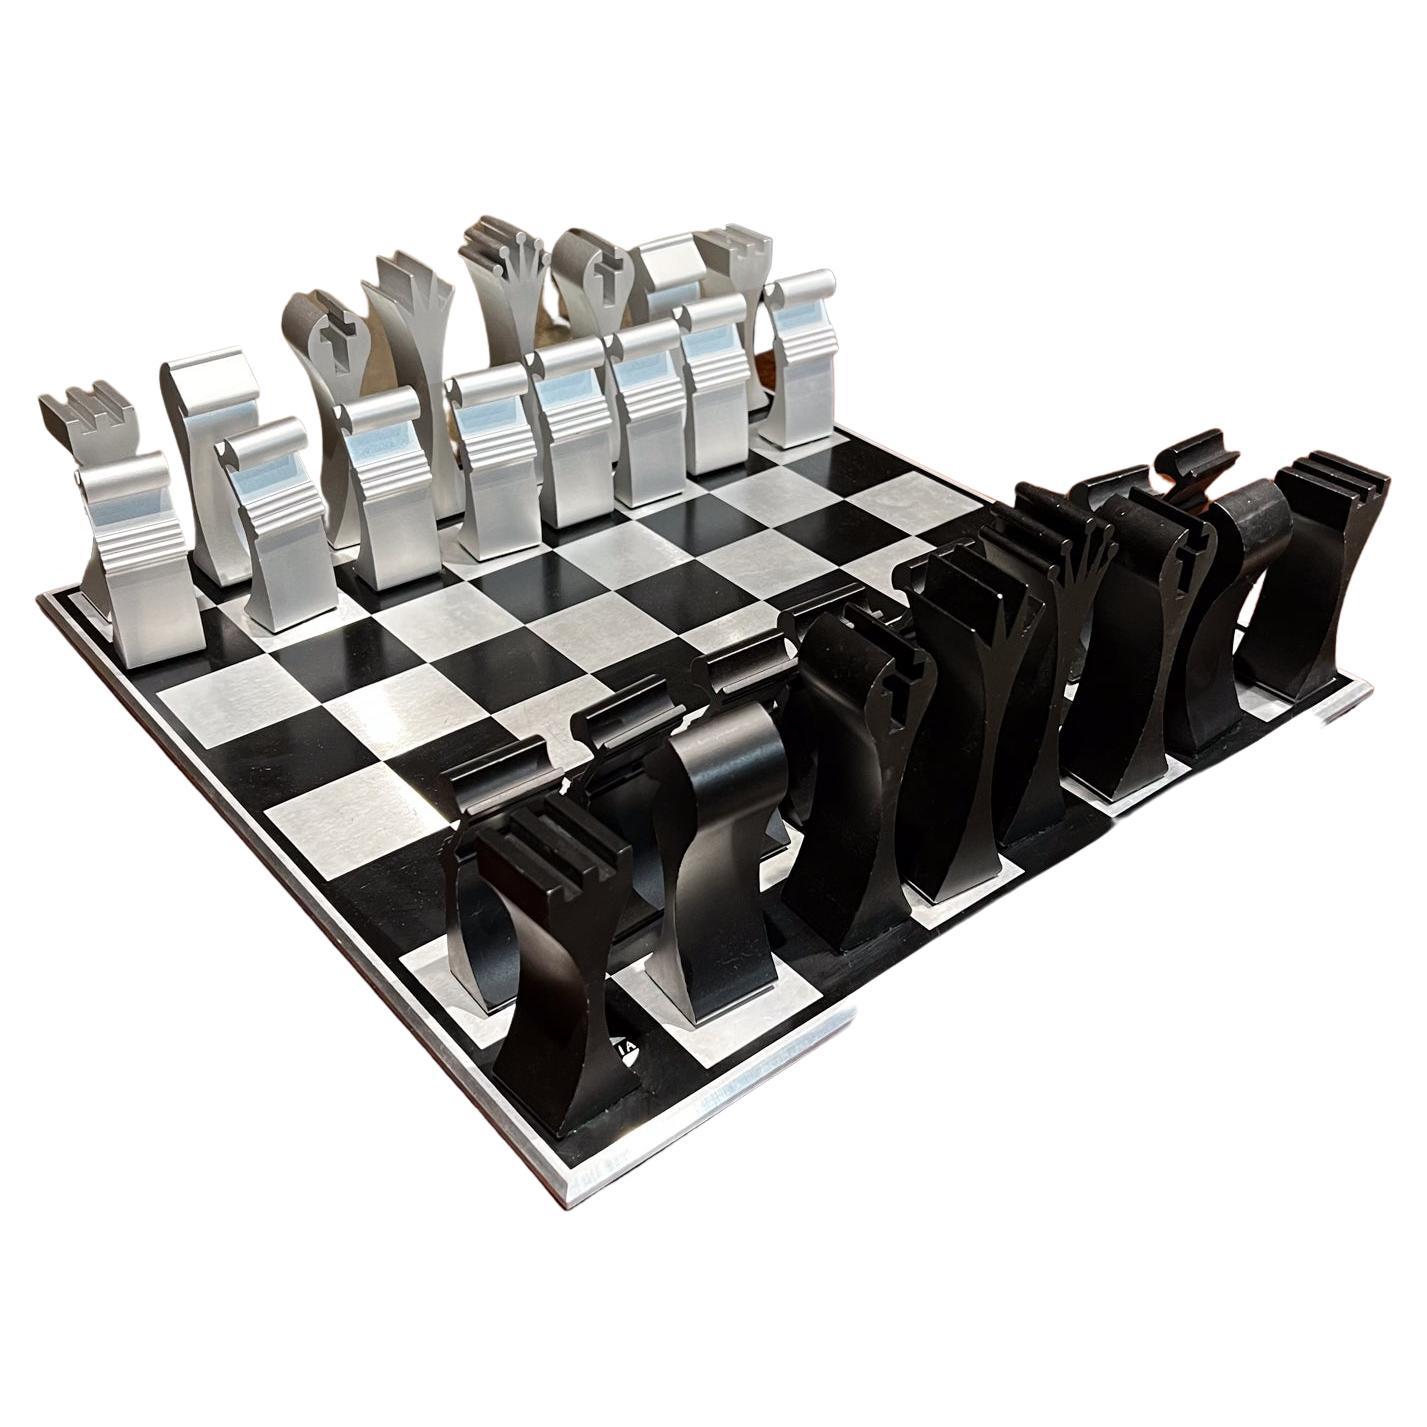 Chess Set Hermes - 4 For Sale on 1stDibs